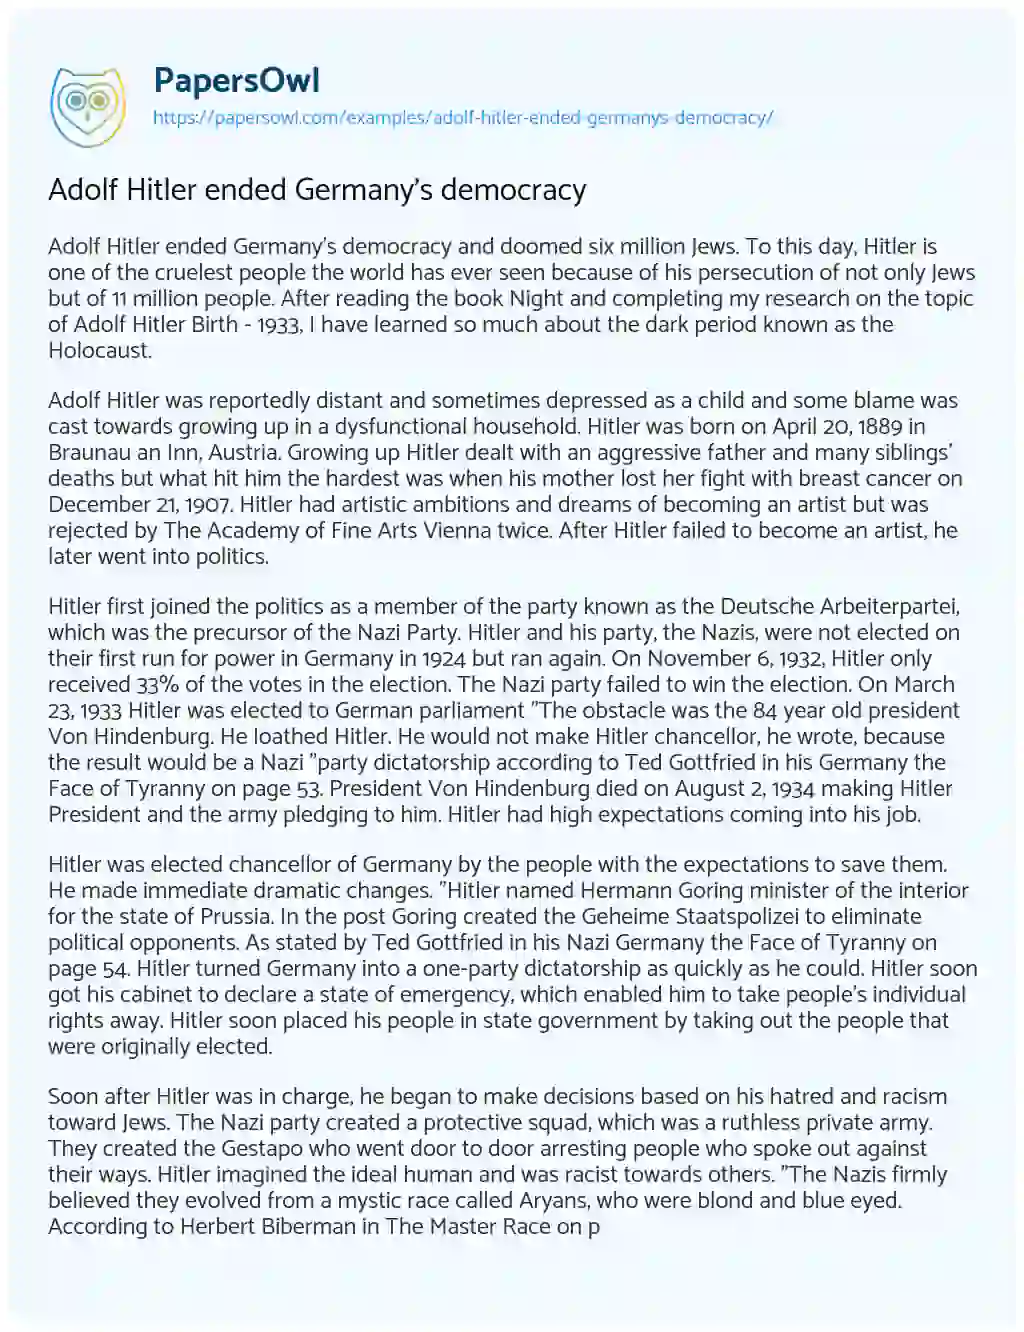 Essay on Adolf Hitler Ended Germany’s Democracy